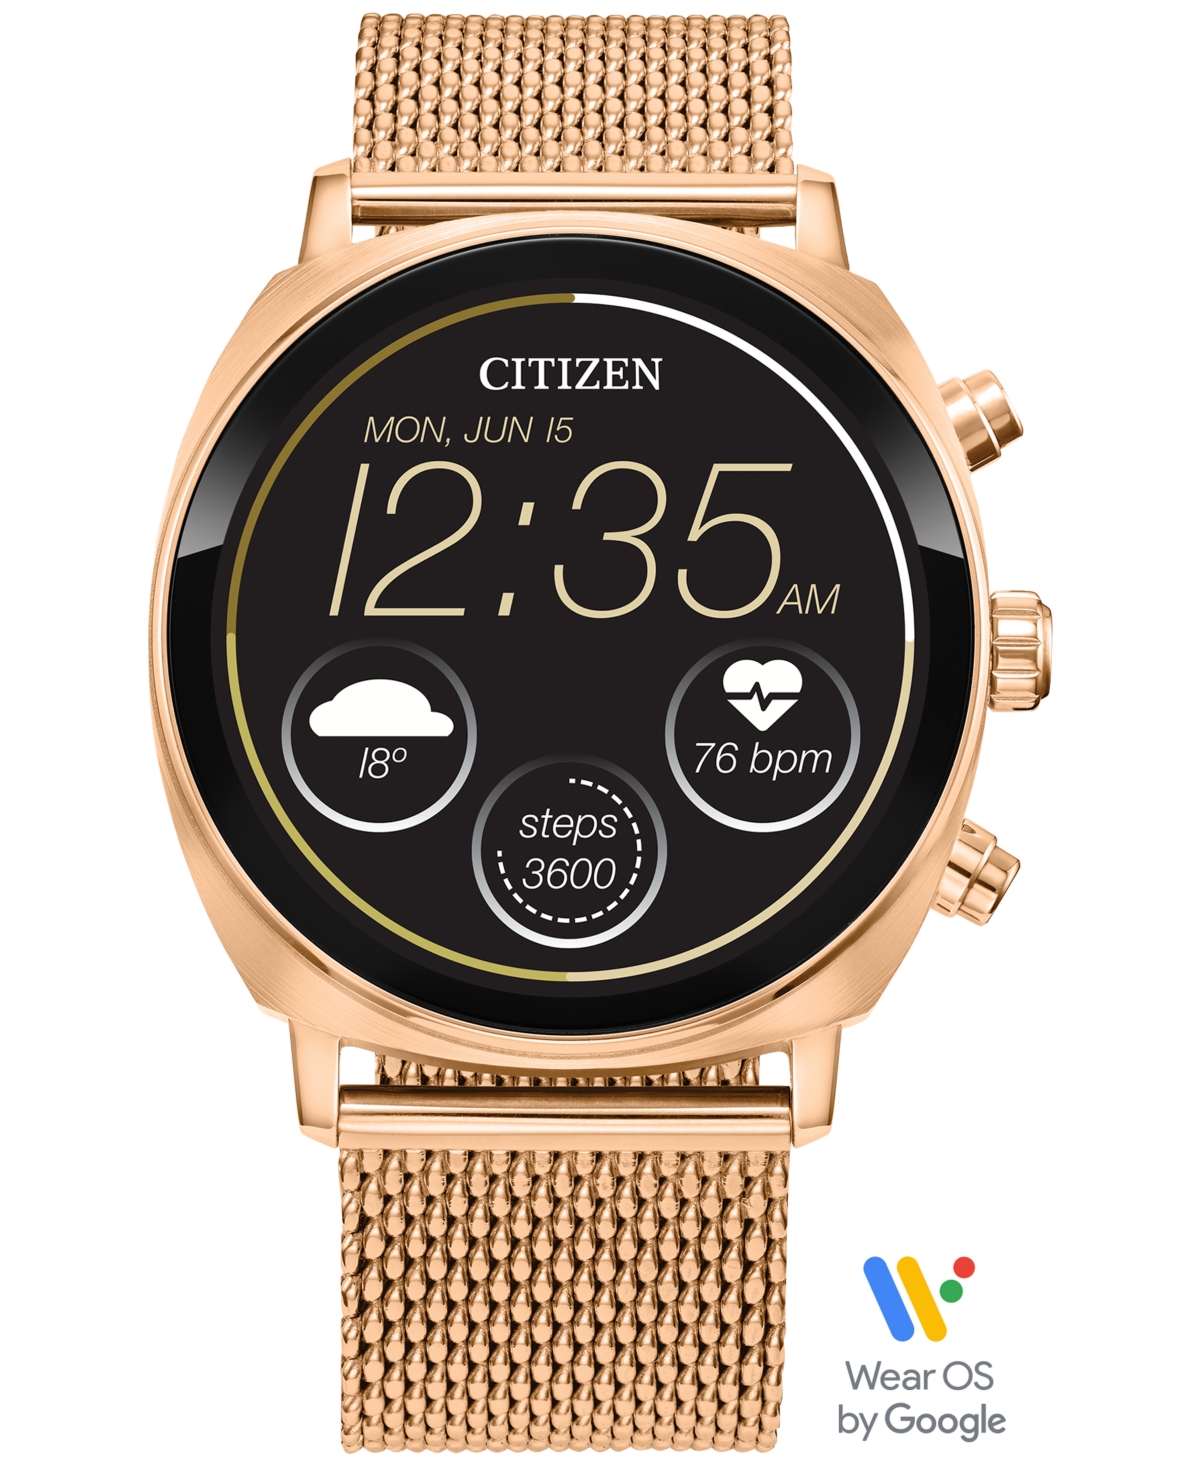 Citizen Unisex Cz Smart Wear Os Rose Gold-tone Stainless Steel Mesh Bracelet Smart Watch 41mm